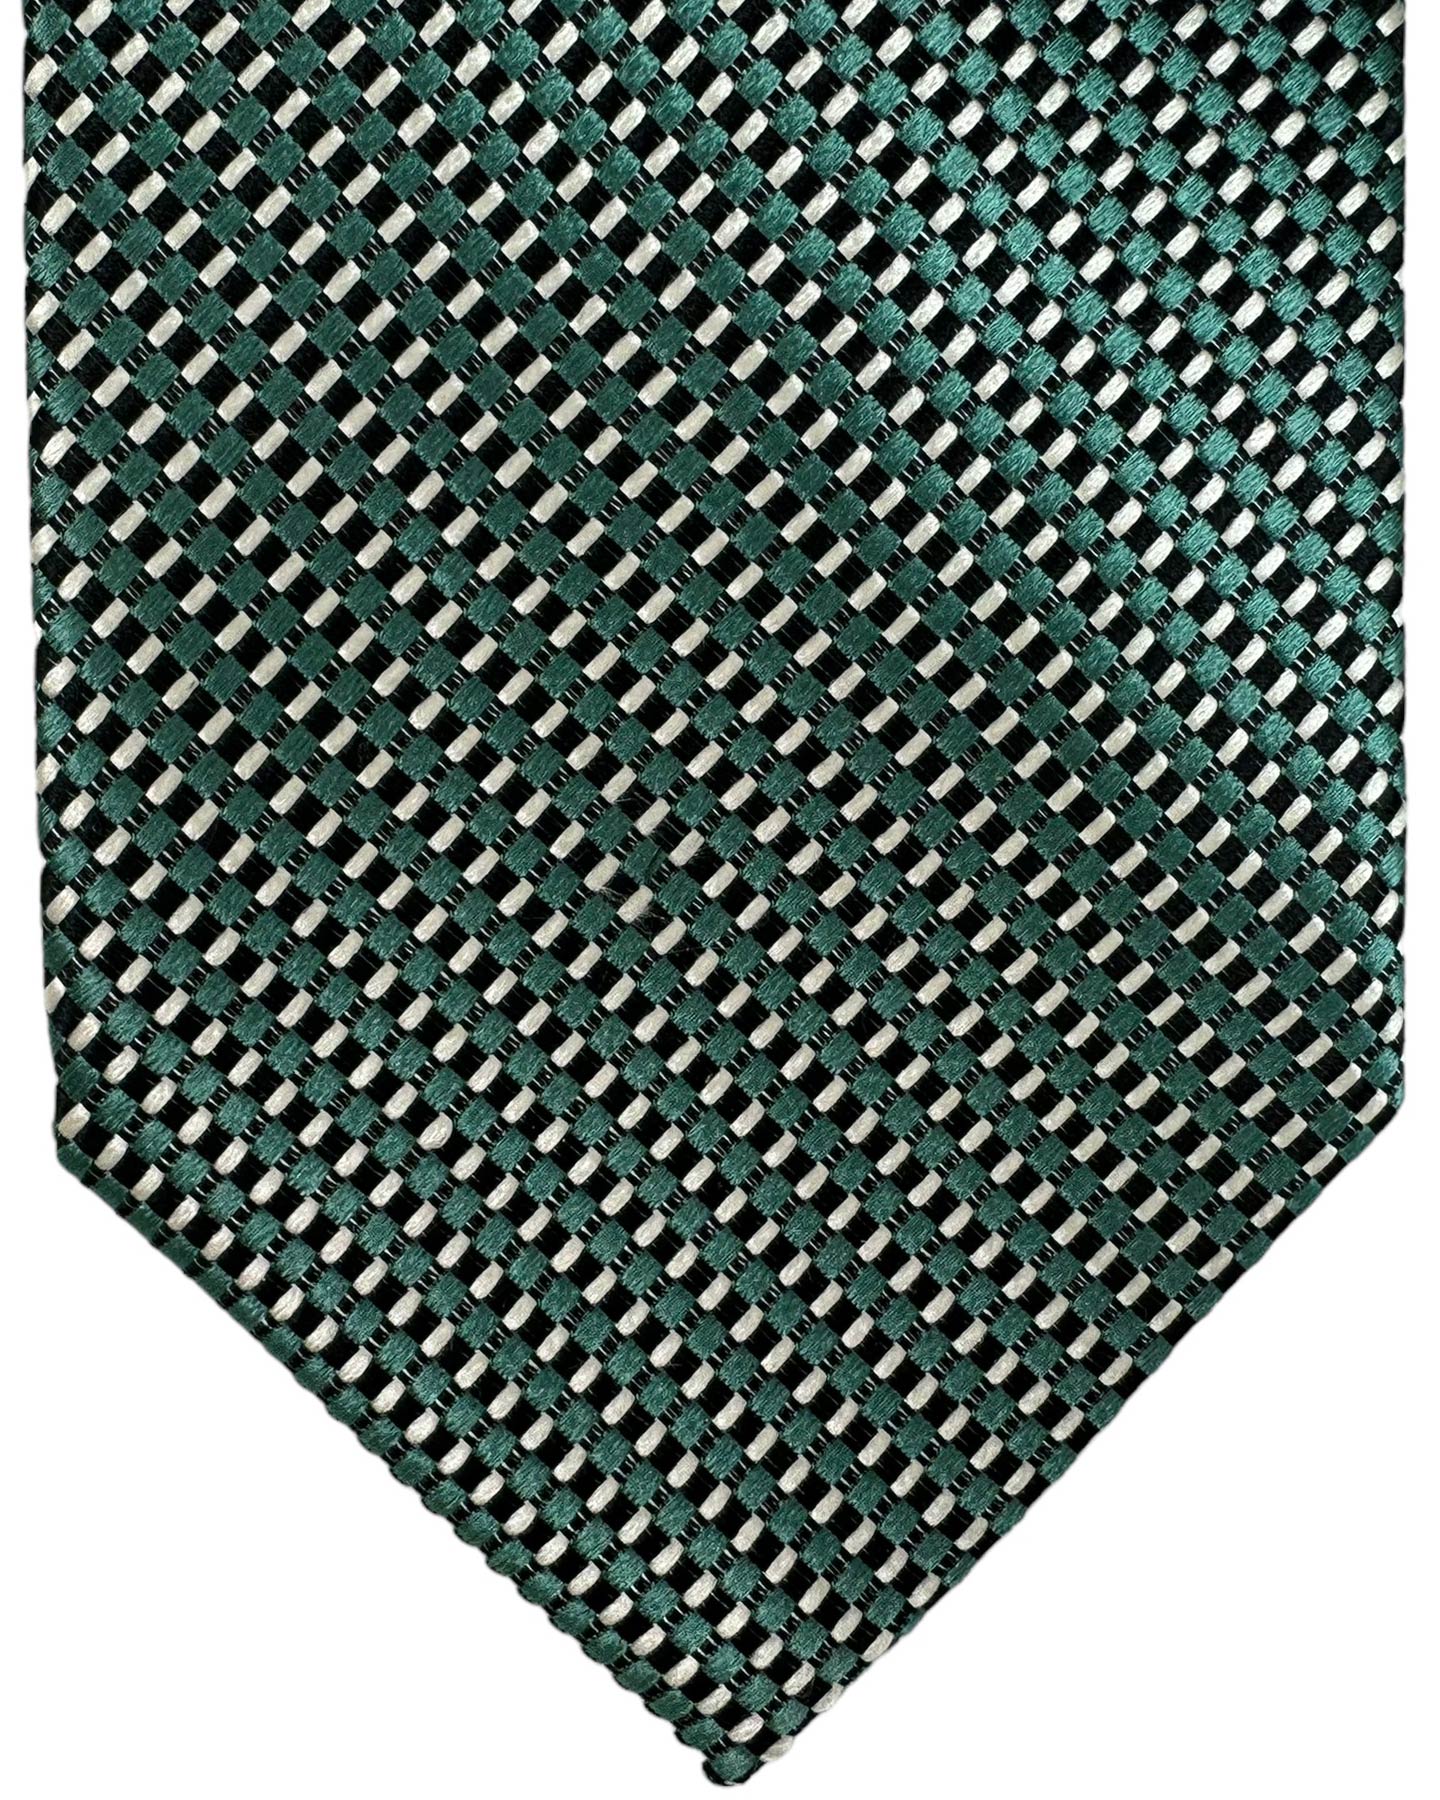 Tom Ford Tie Dark Green Stripes New